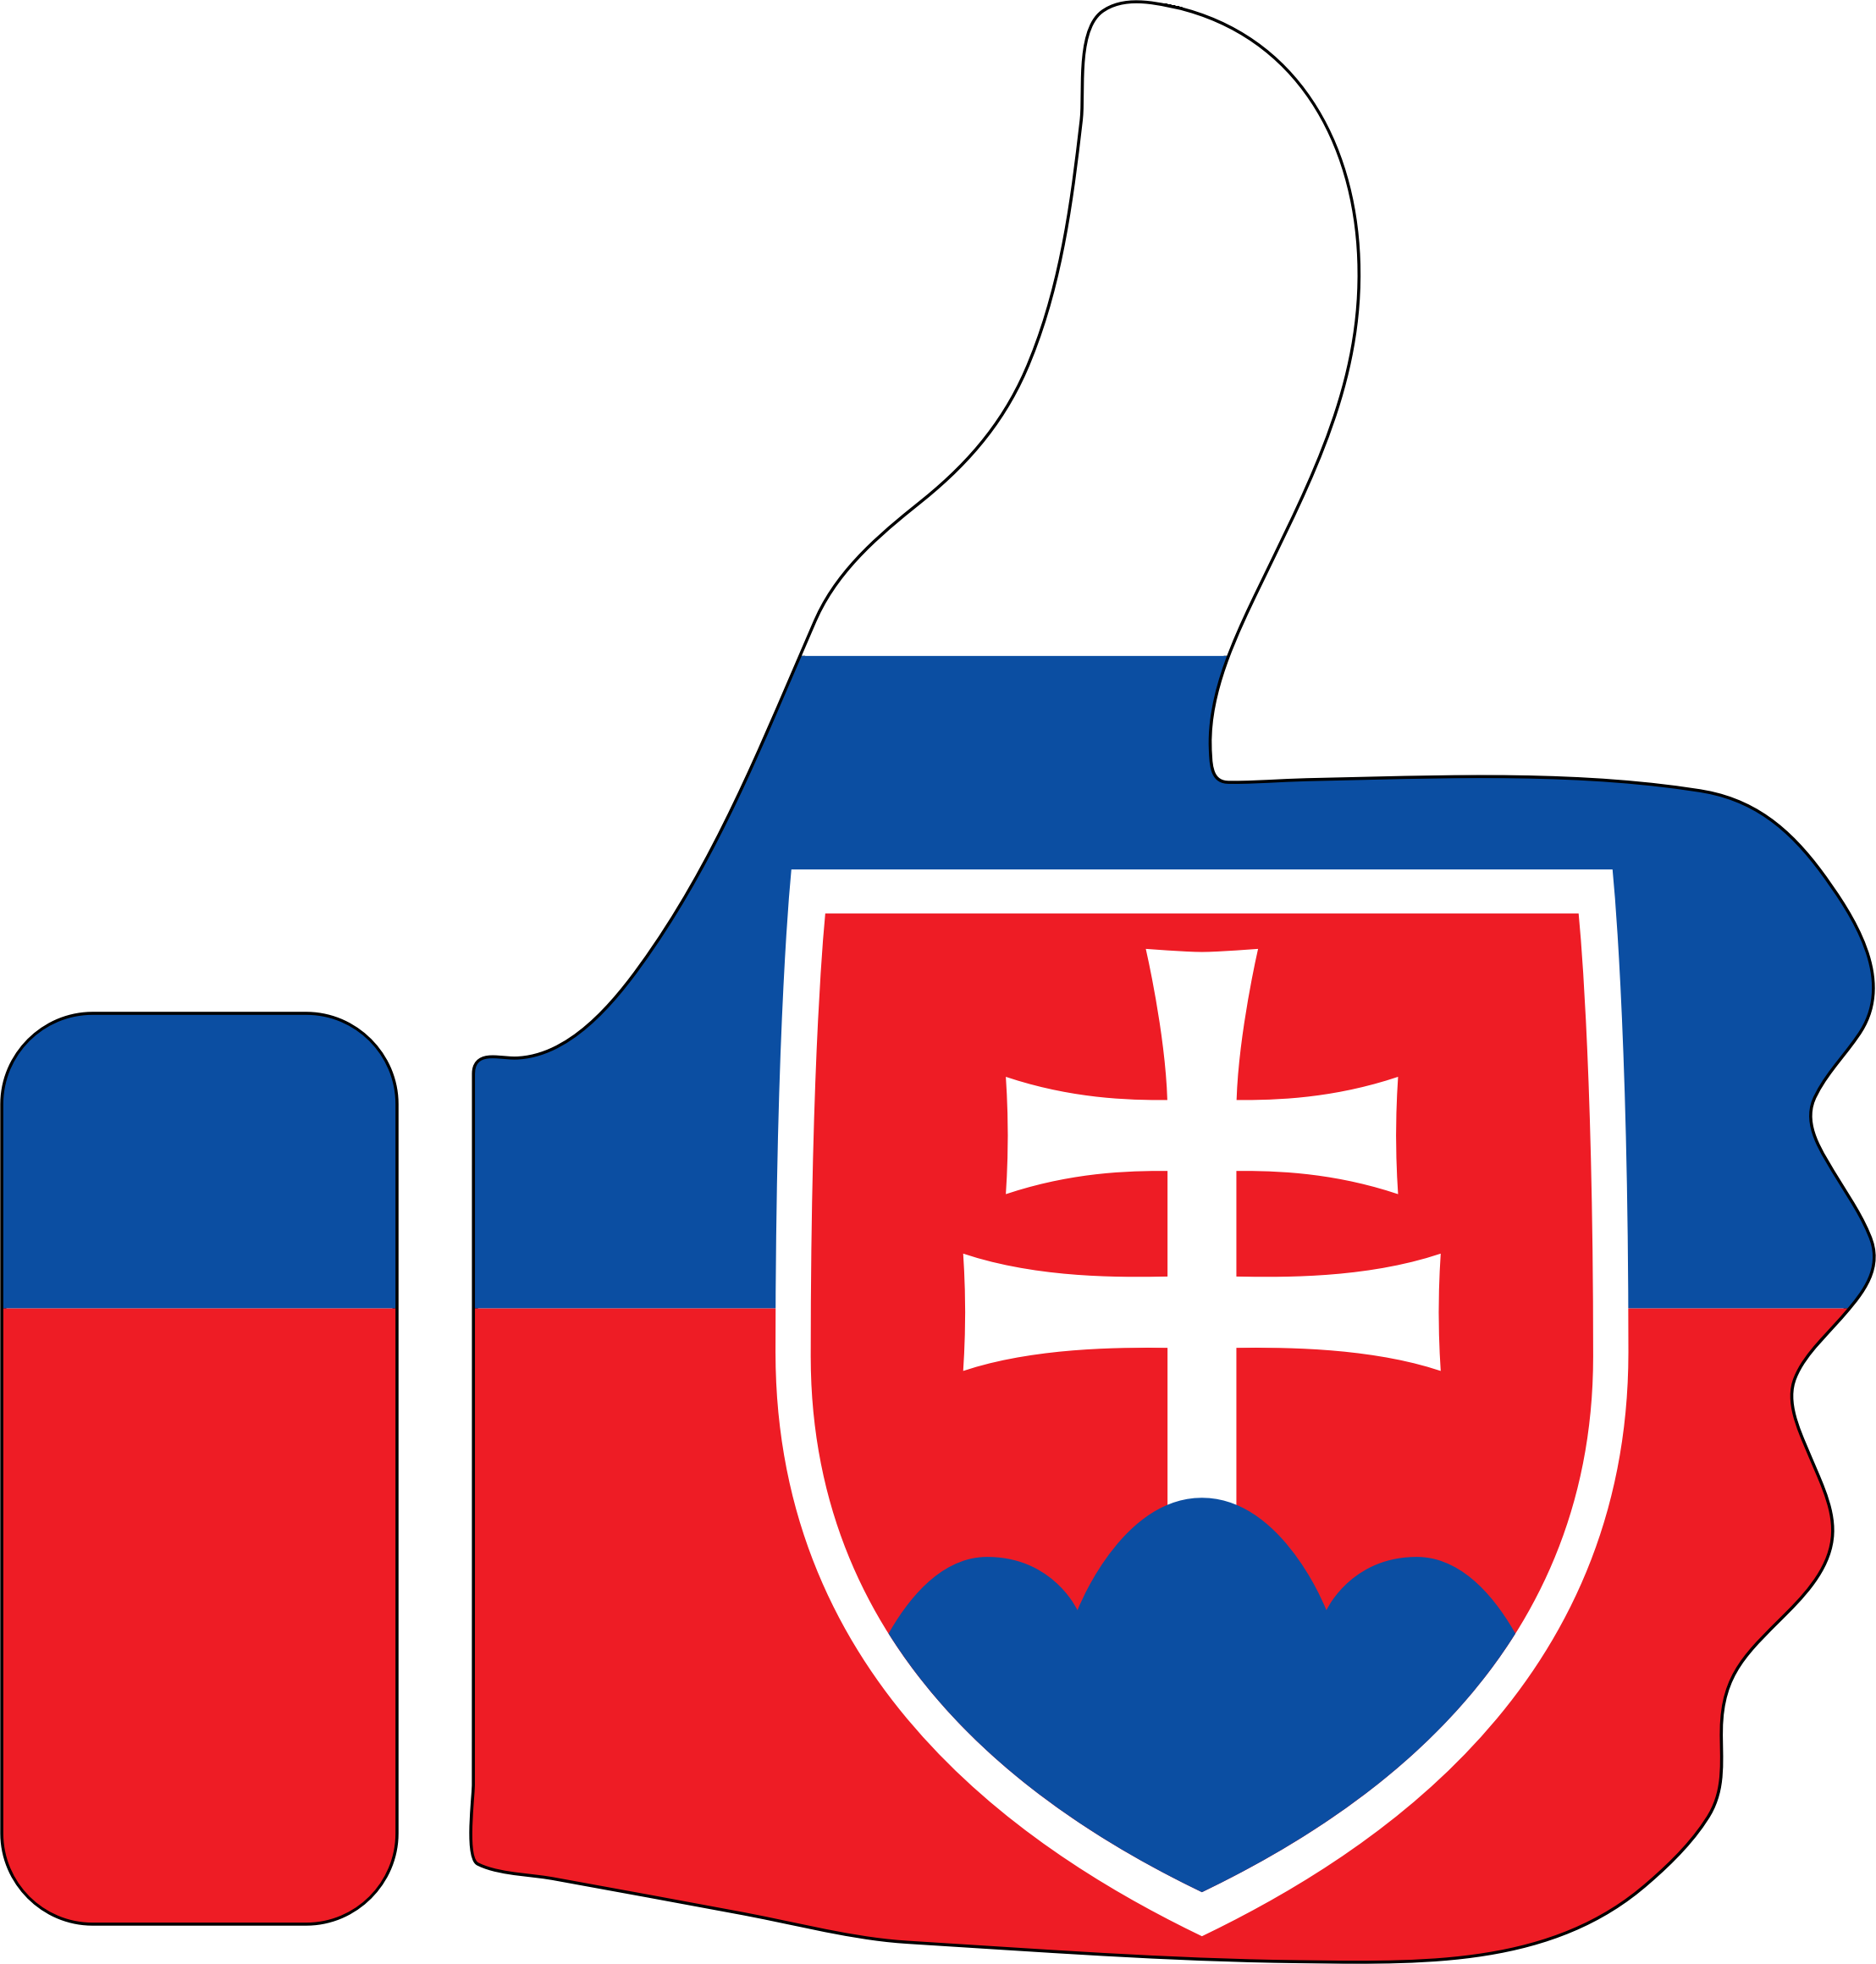 Big Image (Png) - Slovakia, Transparent background PNG HD thumbnail